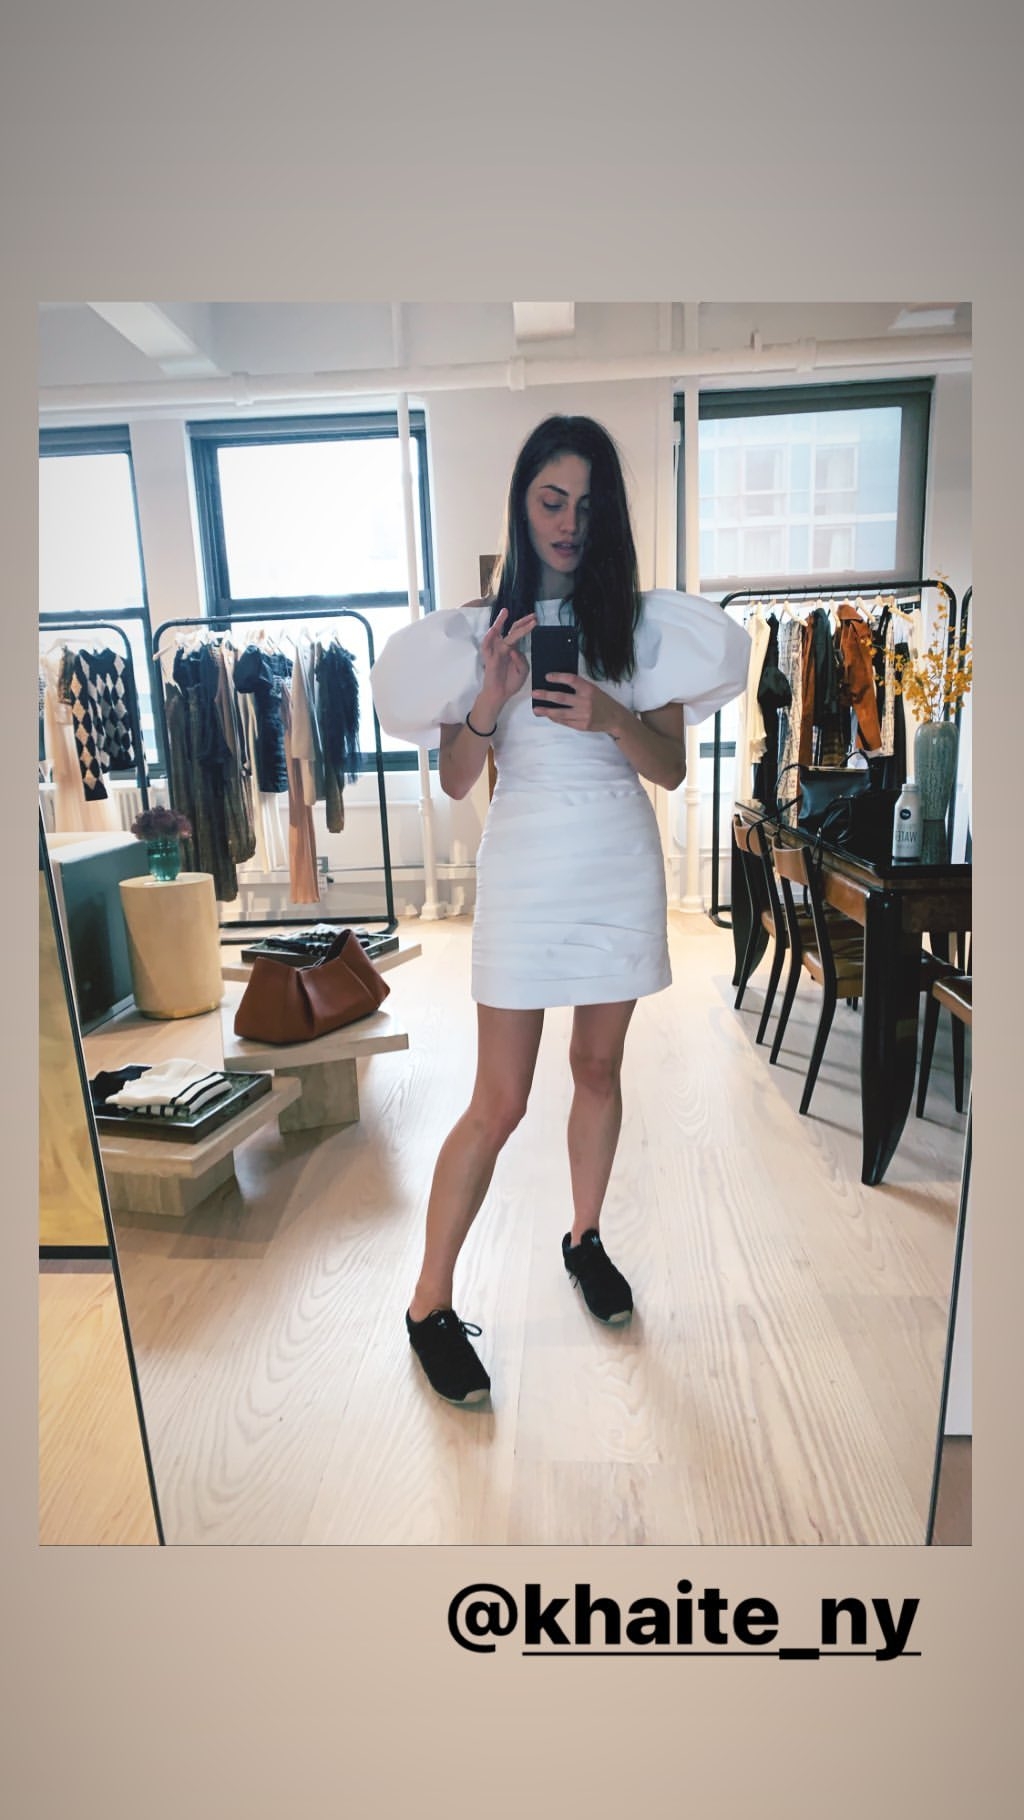 Phoebe Tonkin â€“ Instagram and social media